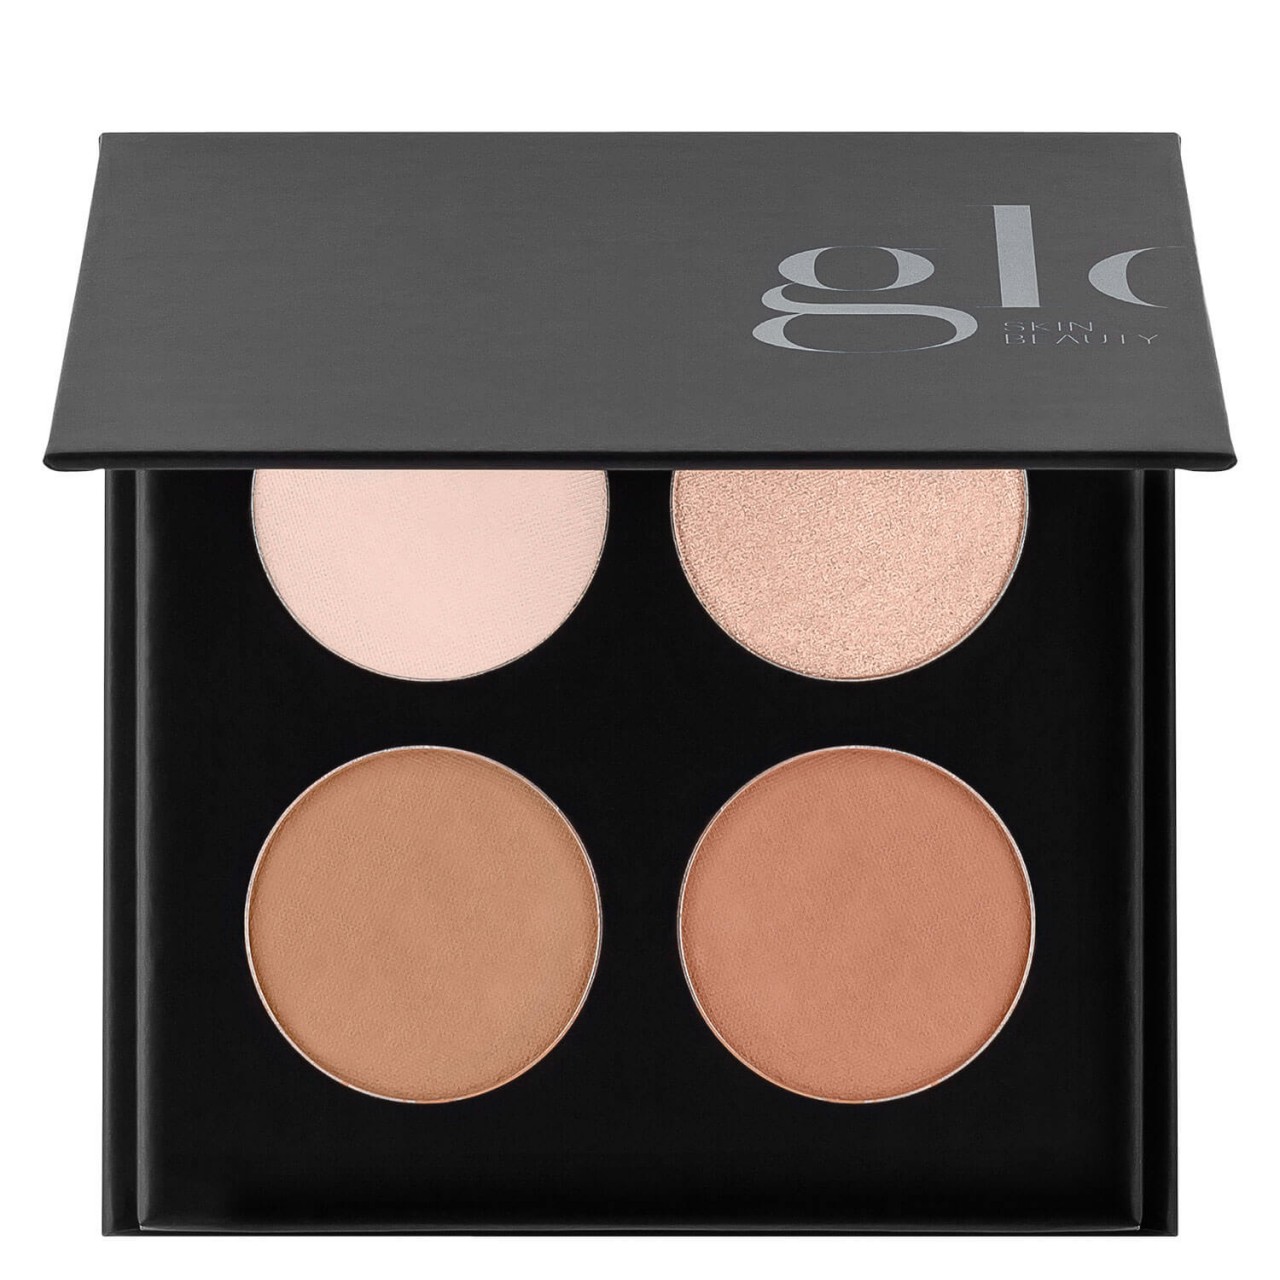 Glo Skin Beauty Contour - Contour Kit Fair to Light von Glo Skin Beauty